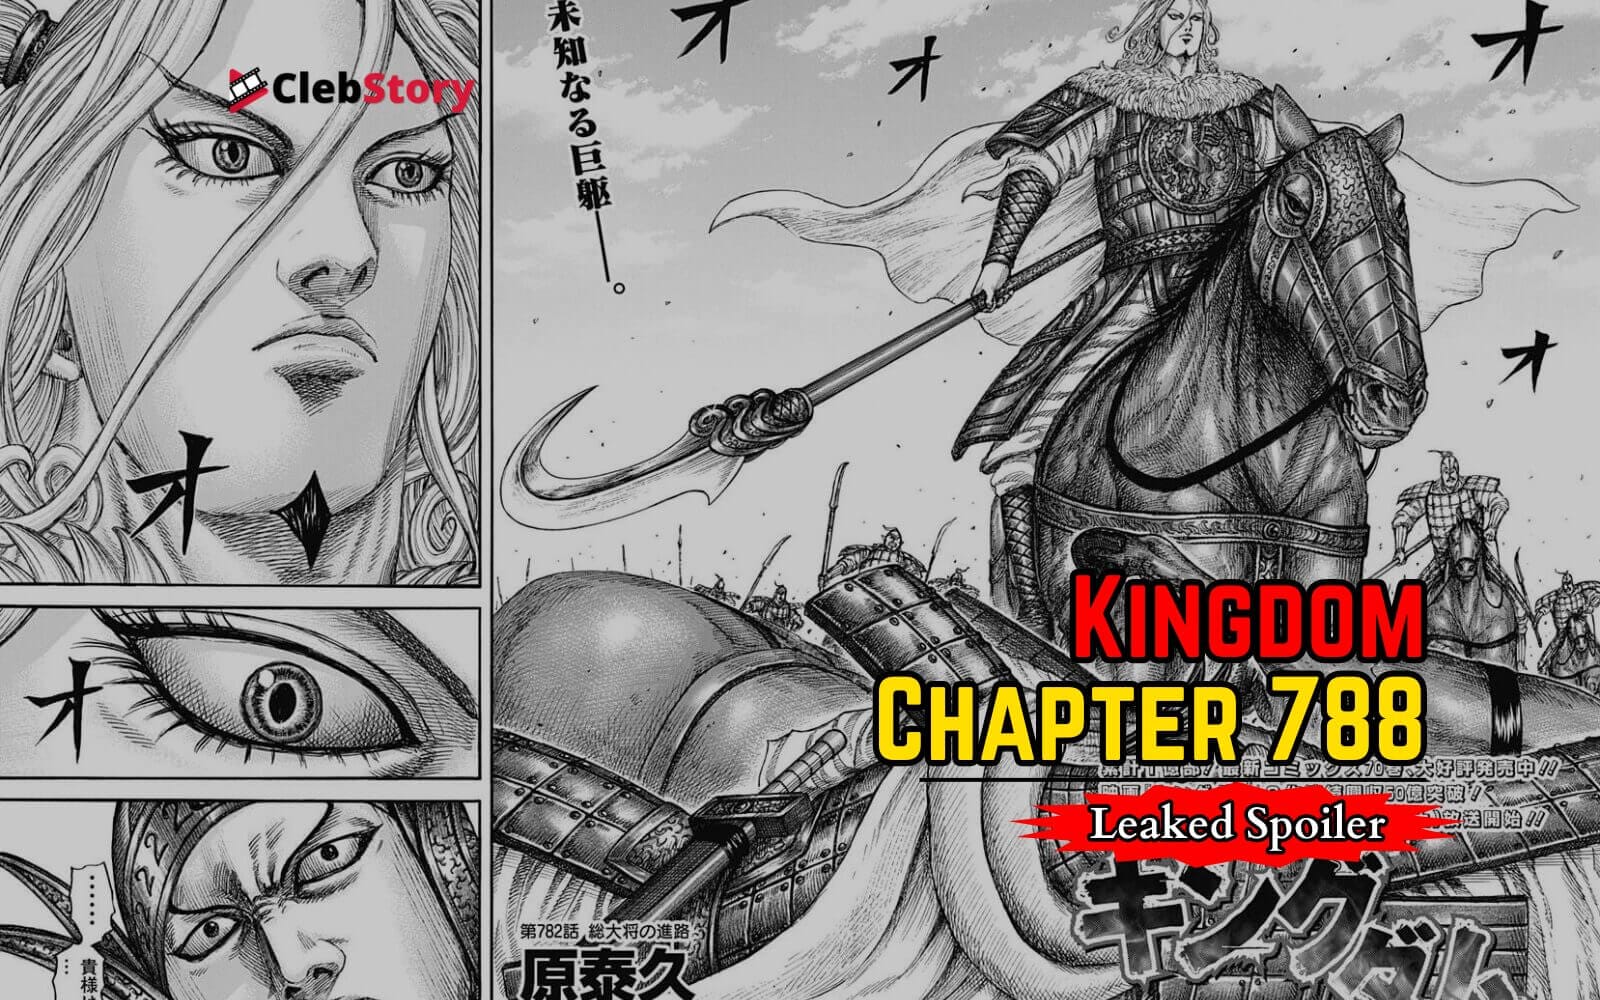 Kingdom Chapter 788 Official Spoiler Leaked